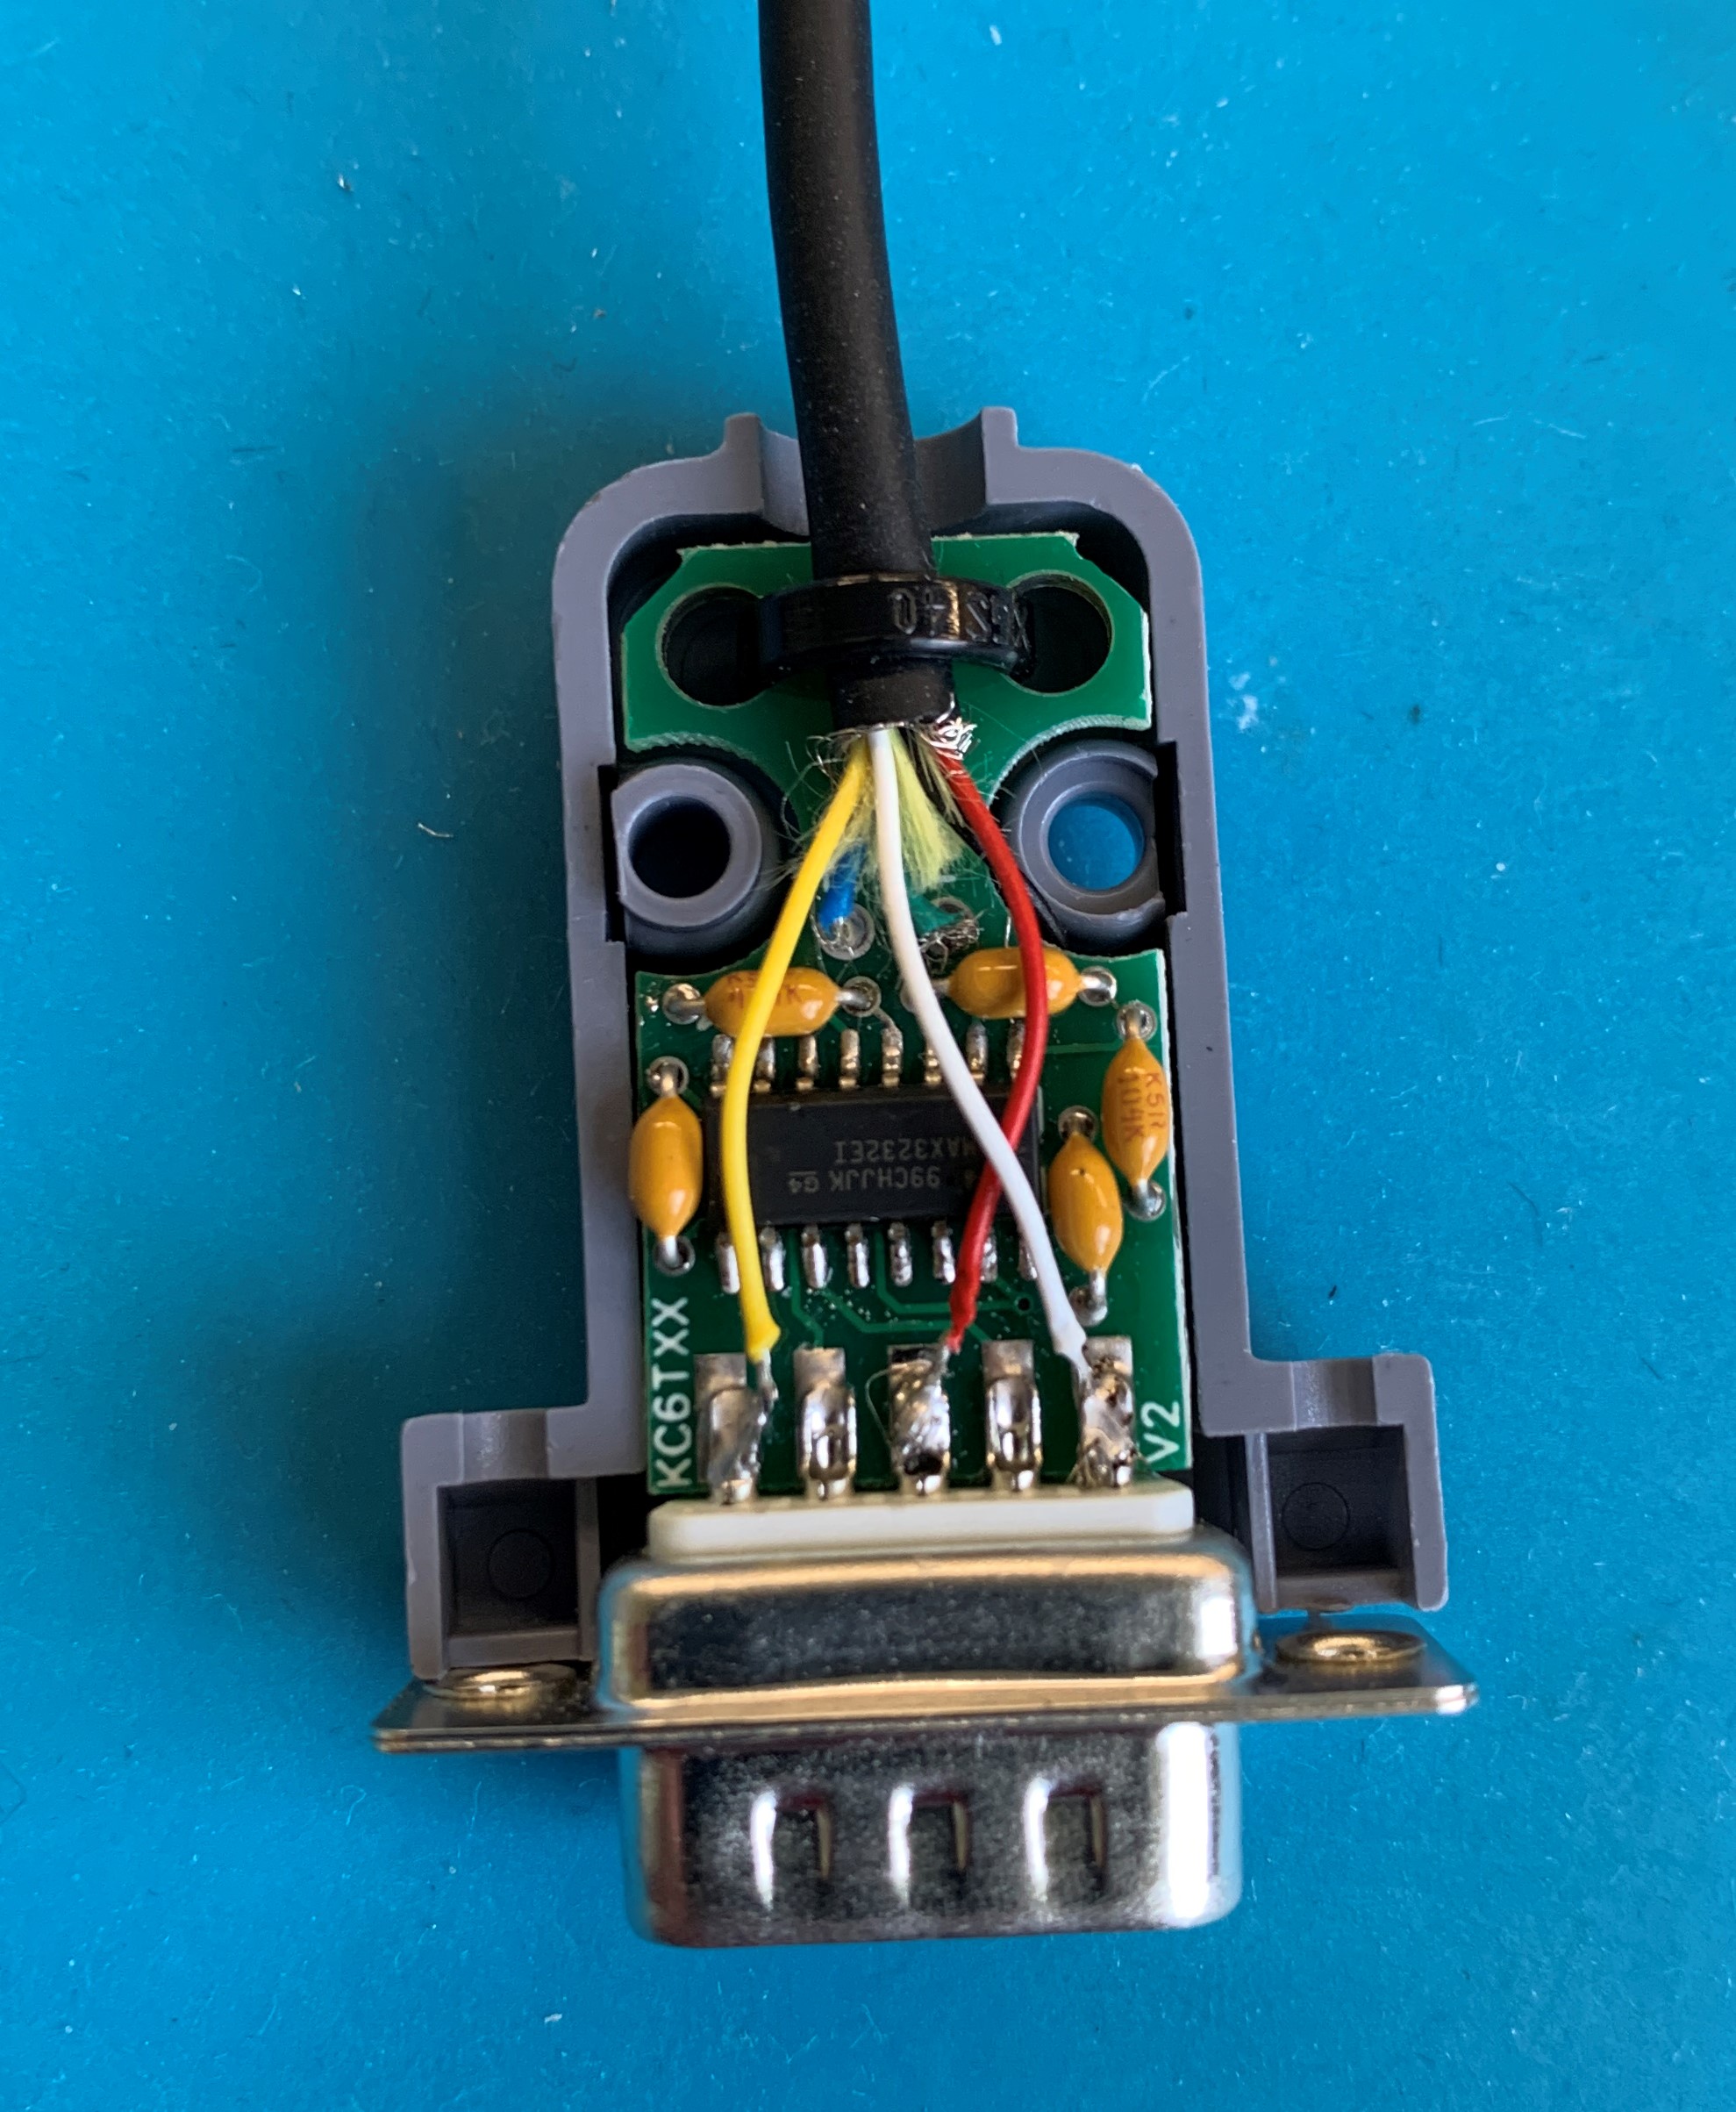 serial port voltage converter inside a db-9 shell